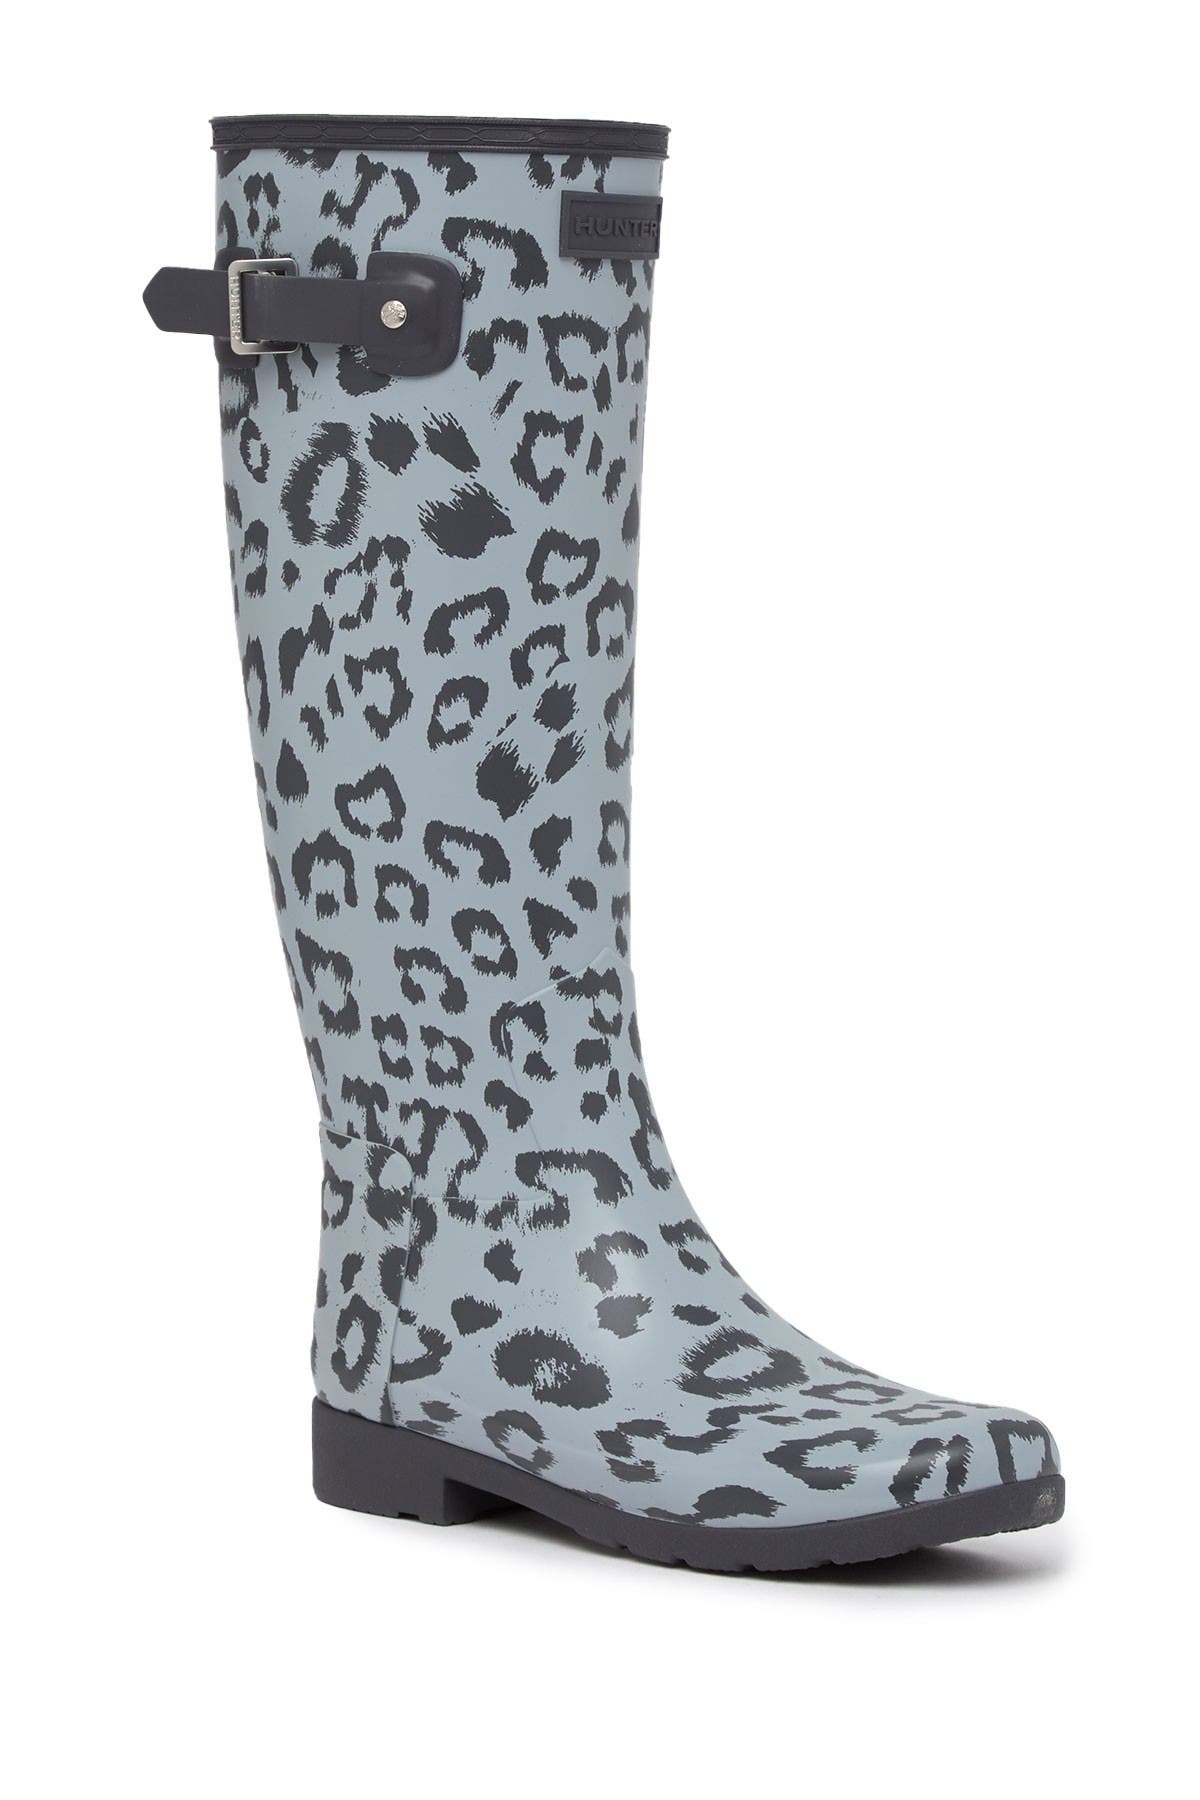 hunter leopard print boots